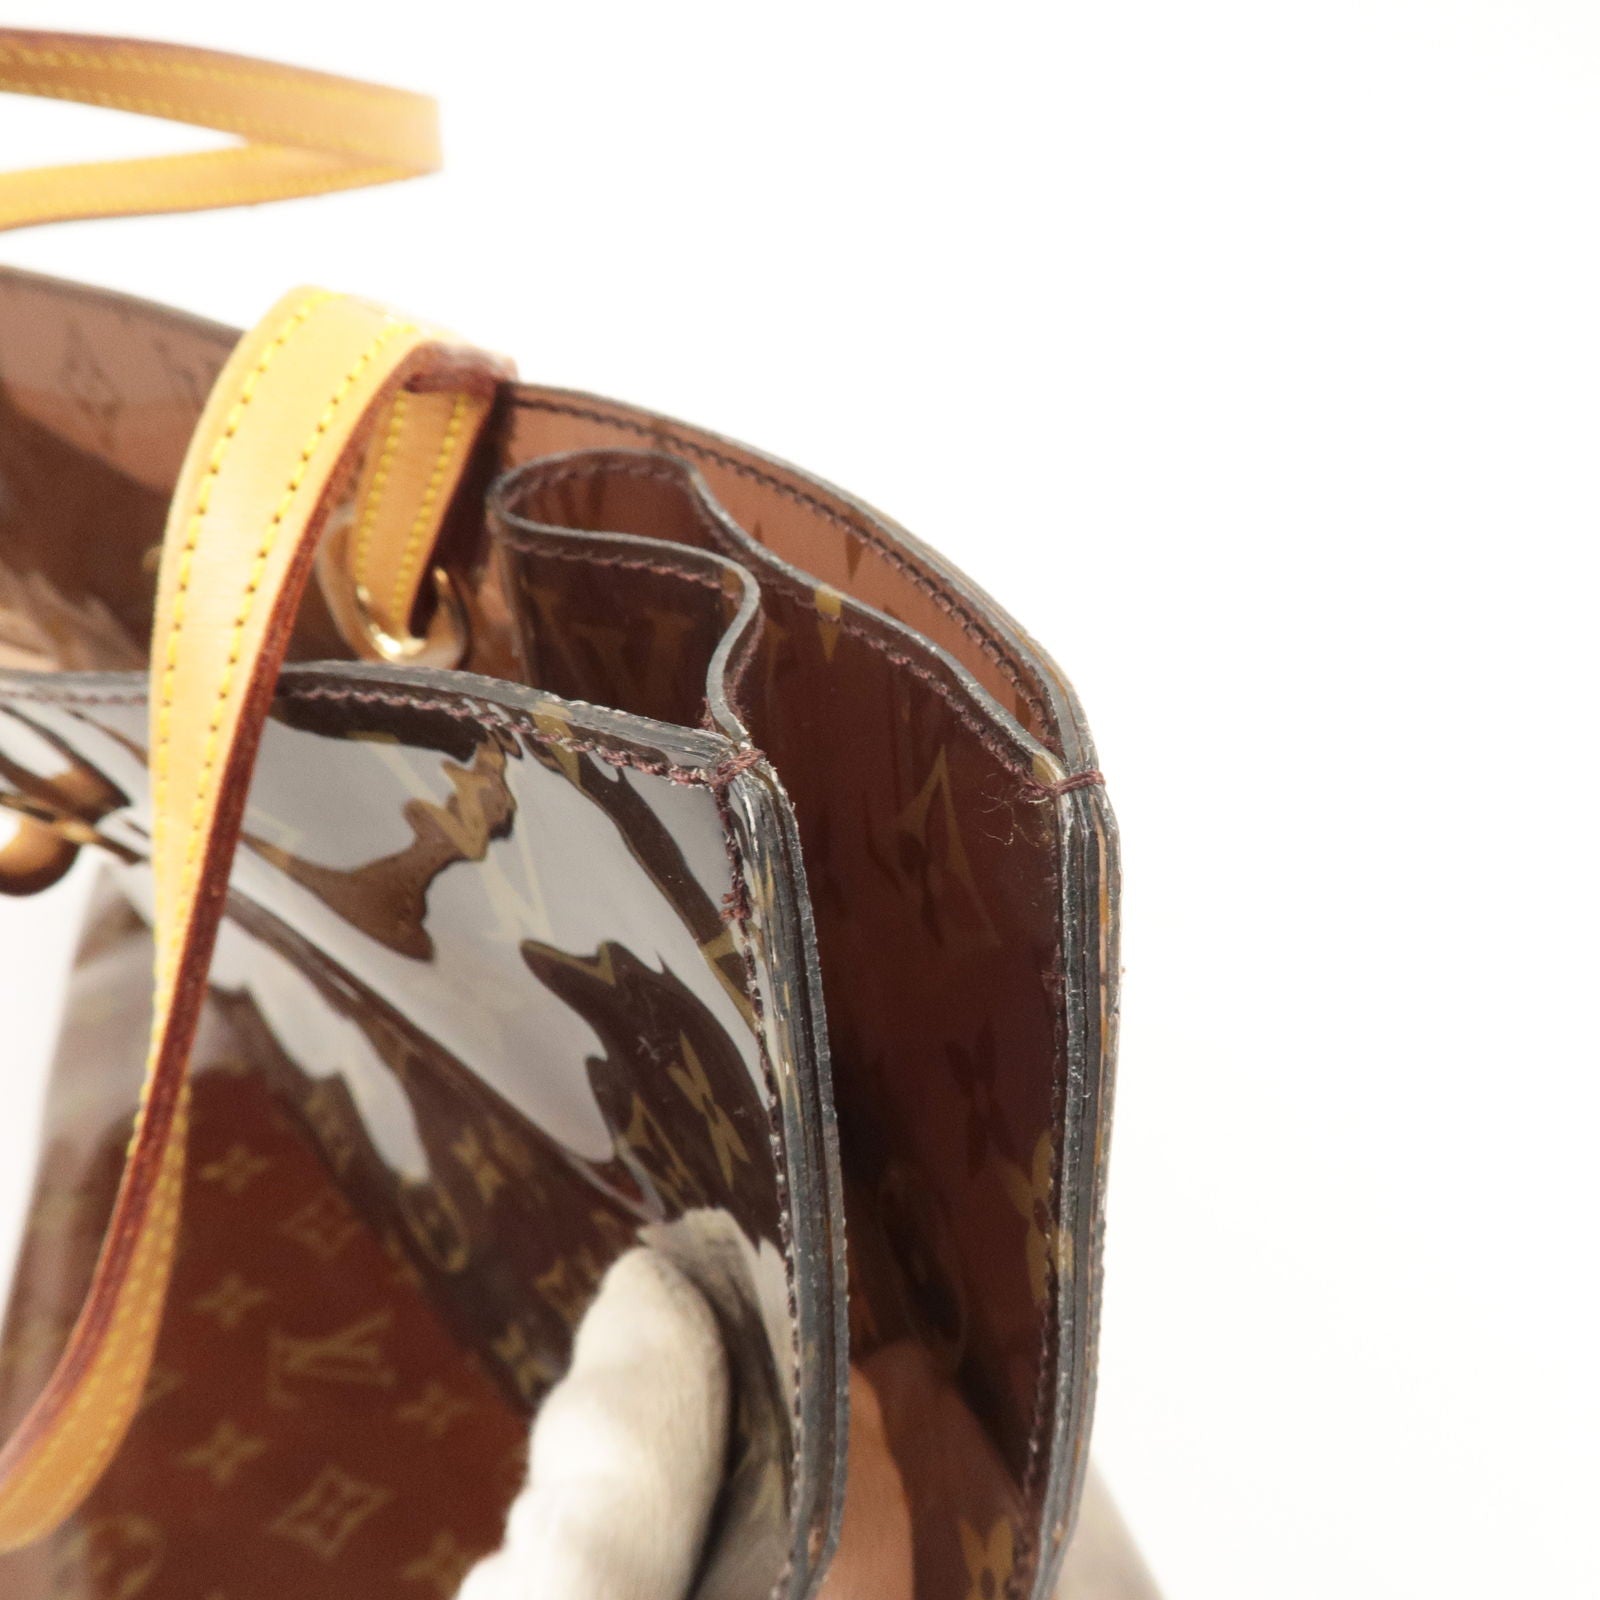 Sold at Auction: Louis Vuitton Toile Antigua Cabas PM handbag